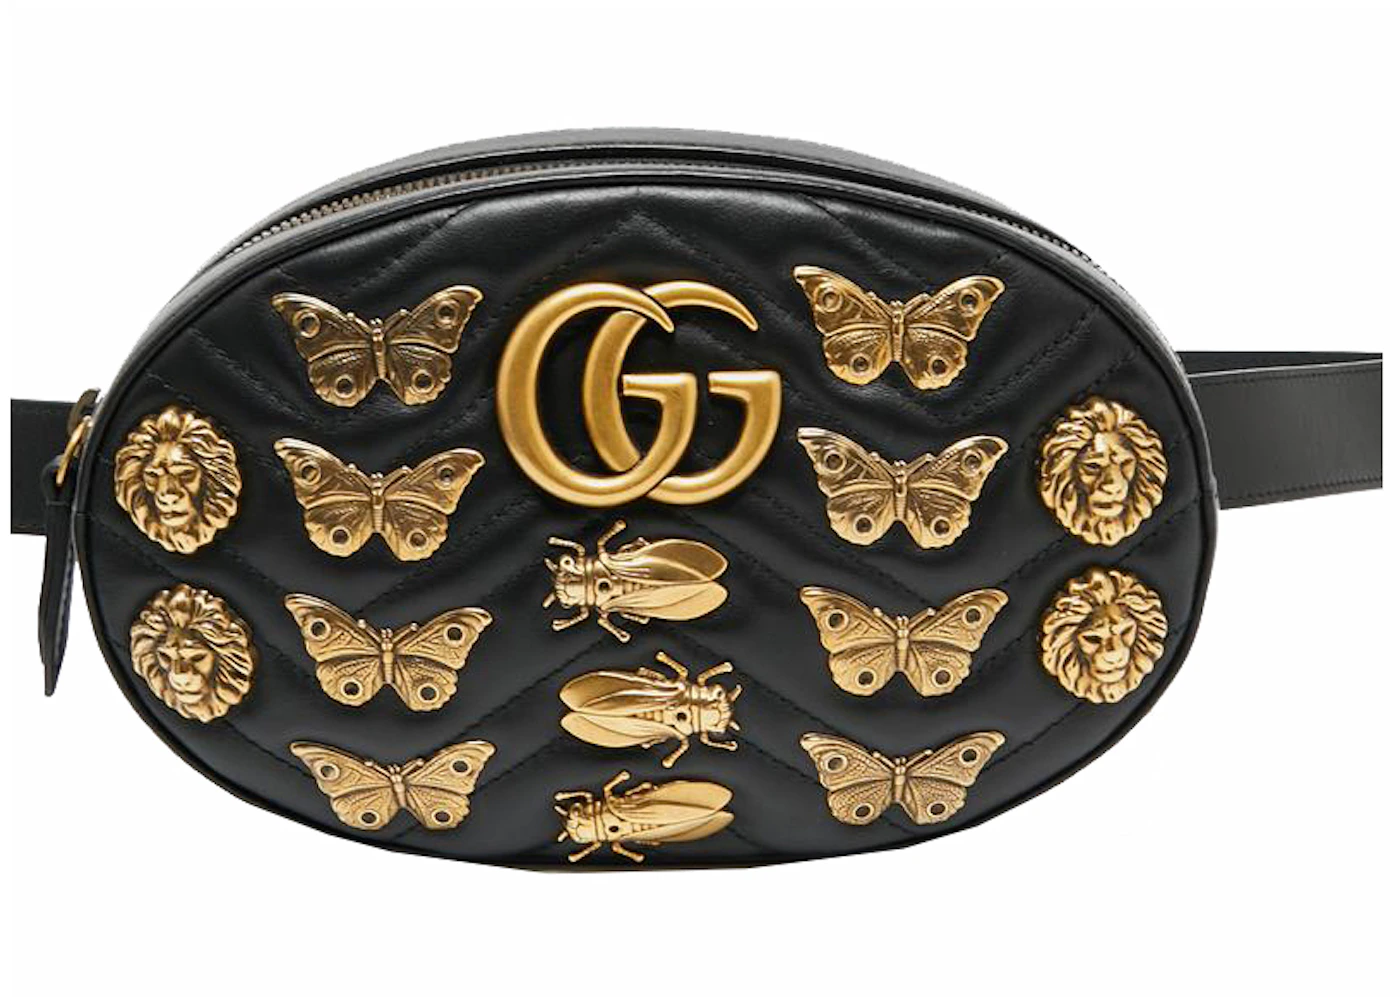 Gucci Black Matelasse Leather Medium GG Marmont Animal Studs Shoulder Bag  Gucci